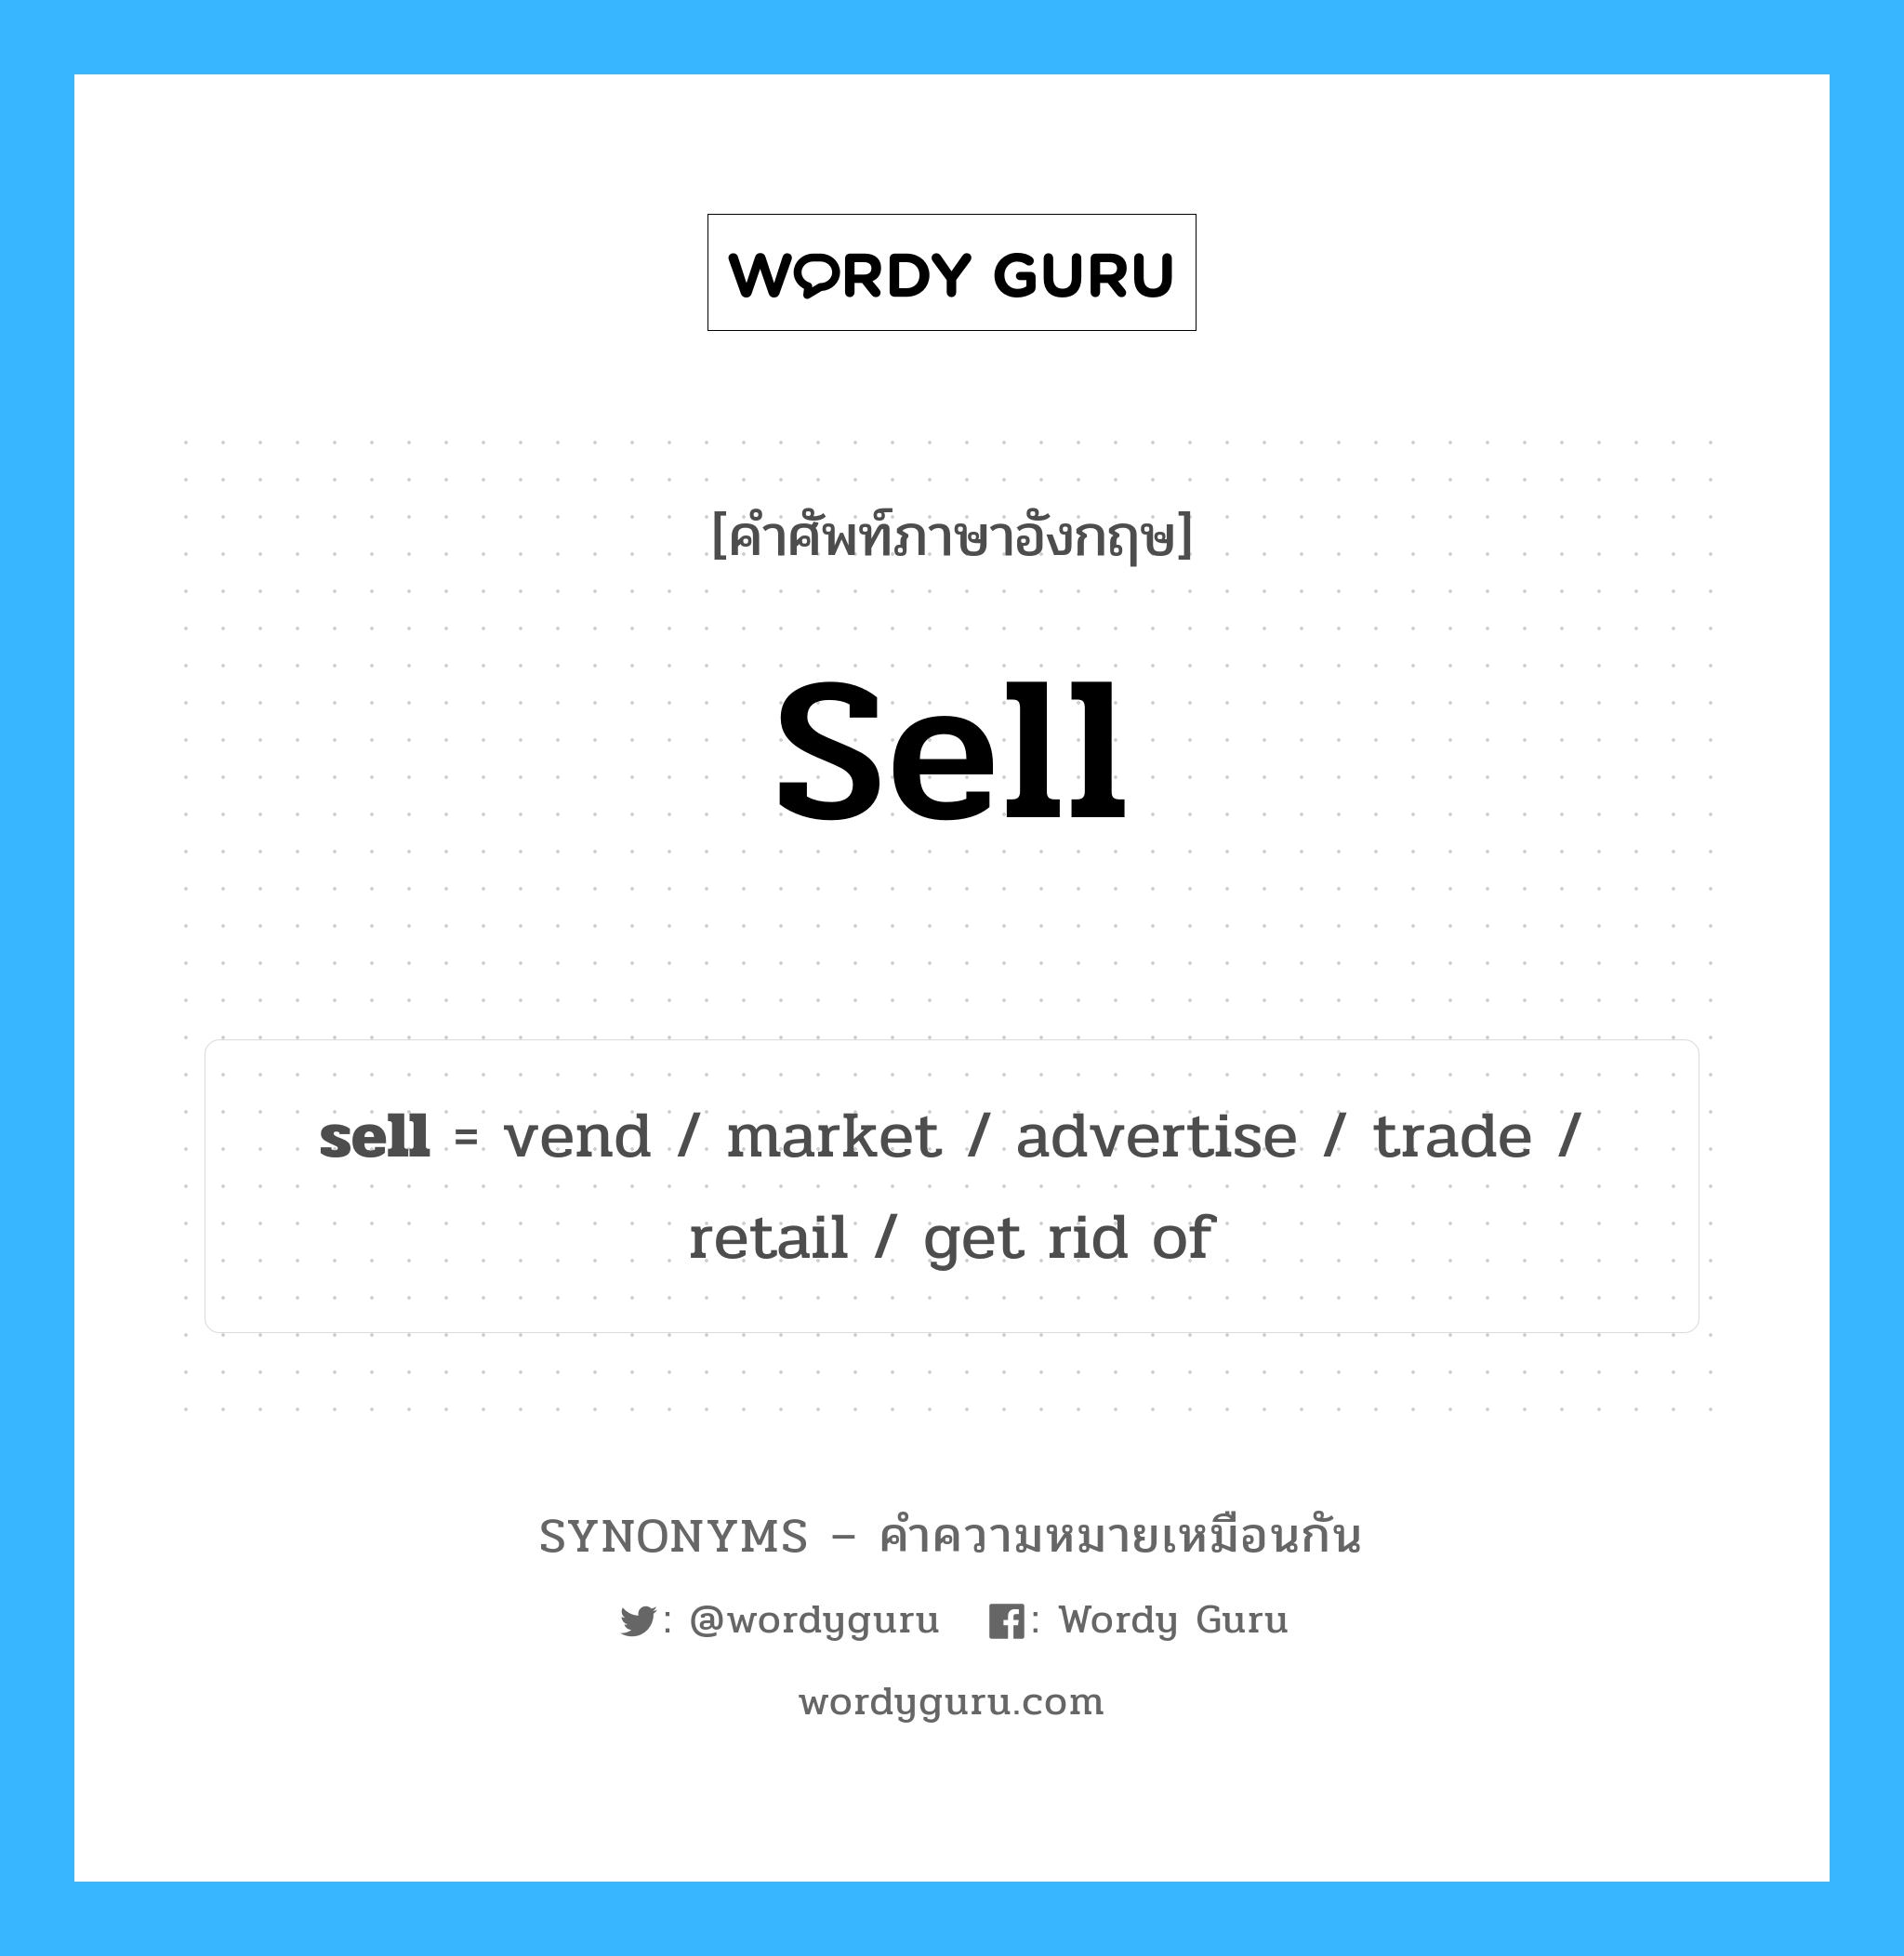 trade เป็นหนึ่งใน job และมีคำอื่น ๆ อีกดังนี้, คำศัพท์ภาษาอังกฤษ trade ความหมายคล้ายกันกับ sell แปลว่า การค้า หมวด sell